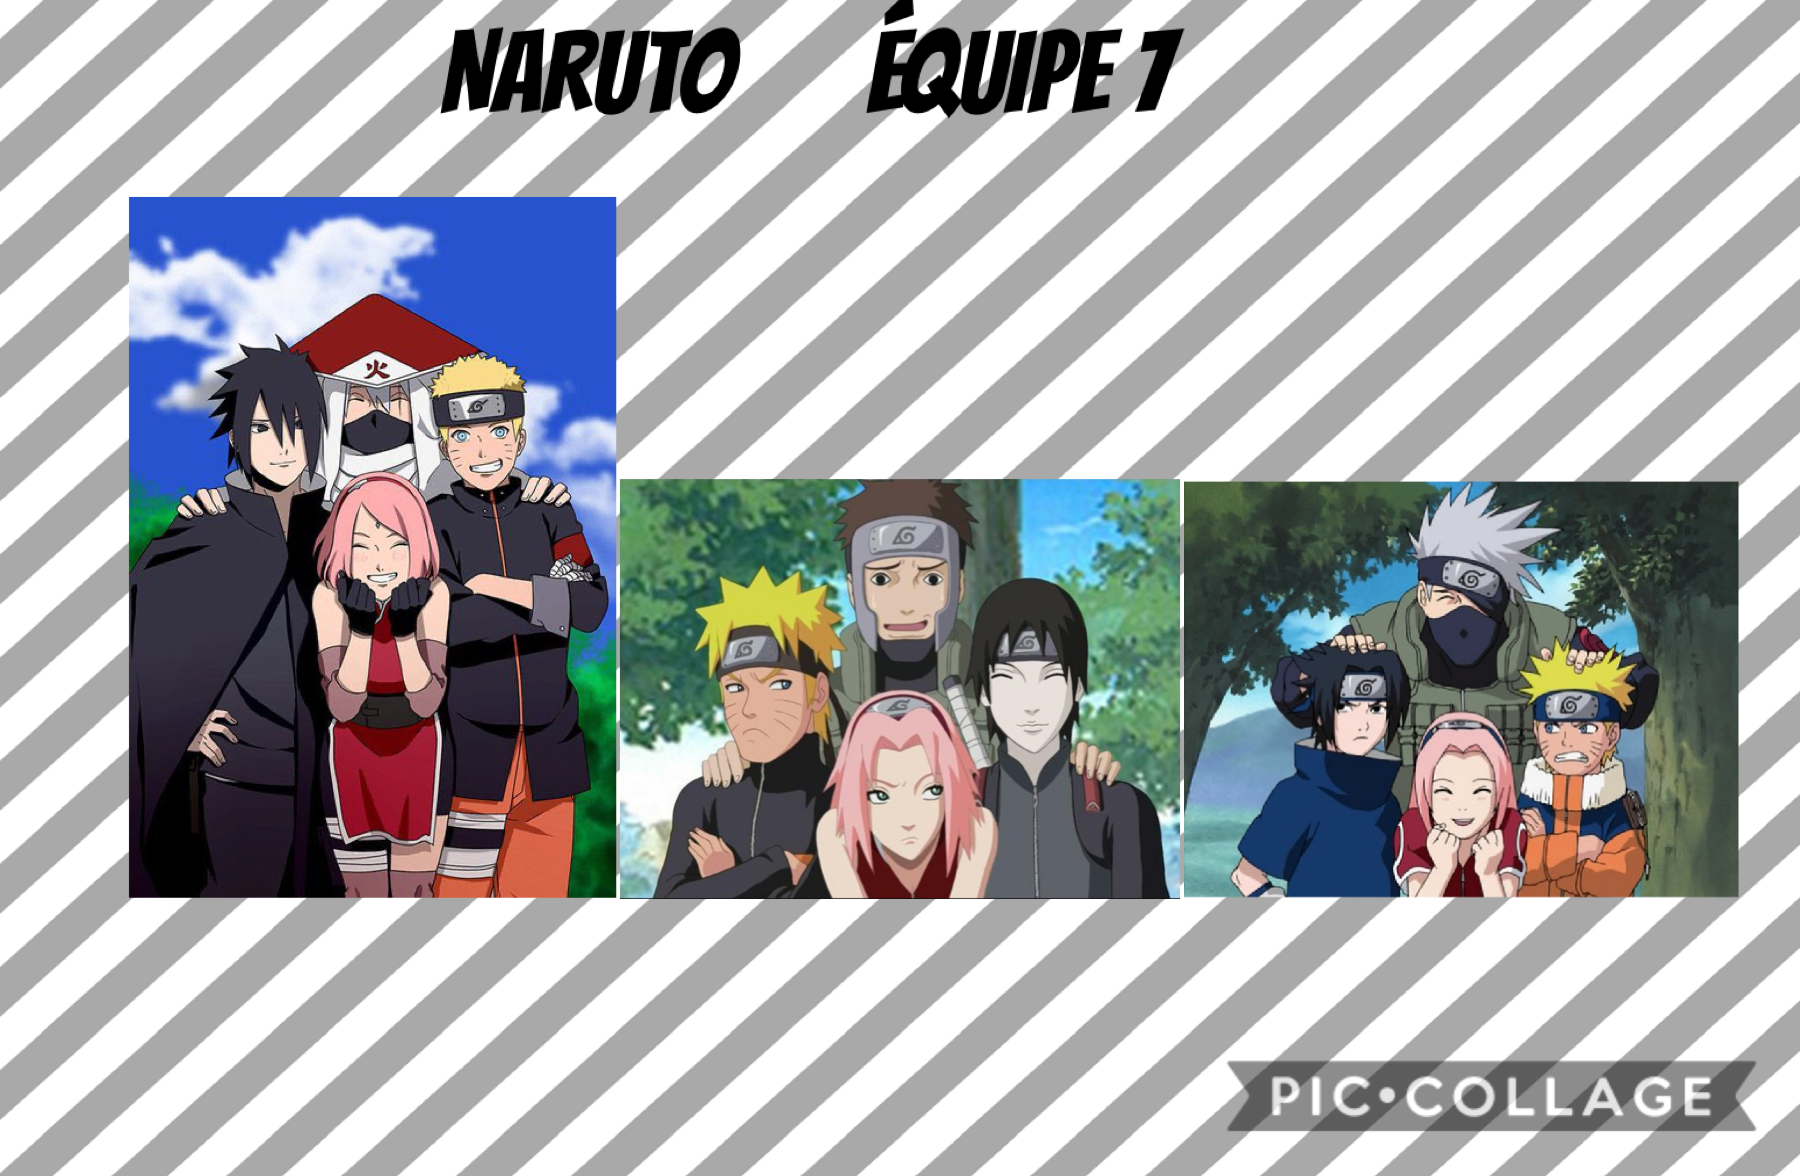 Quel est votre série manga préféré?moi perso Naruto 
What is your favorite manga series ? Me personal Naruto

